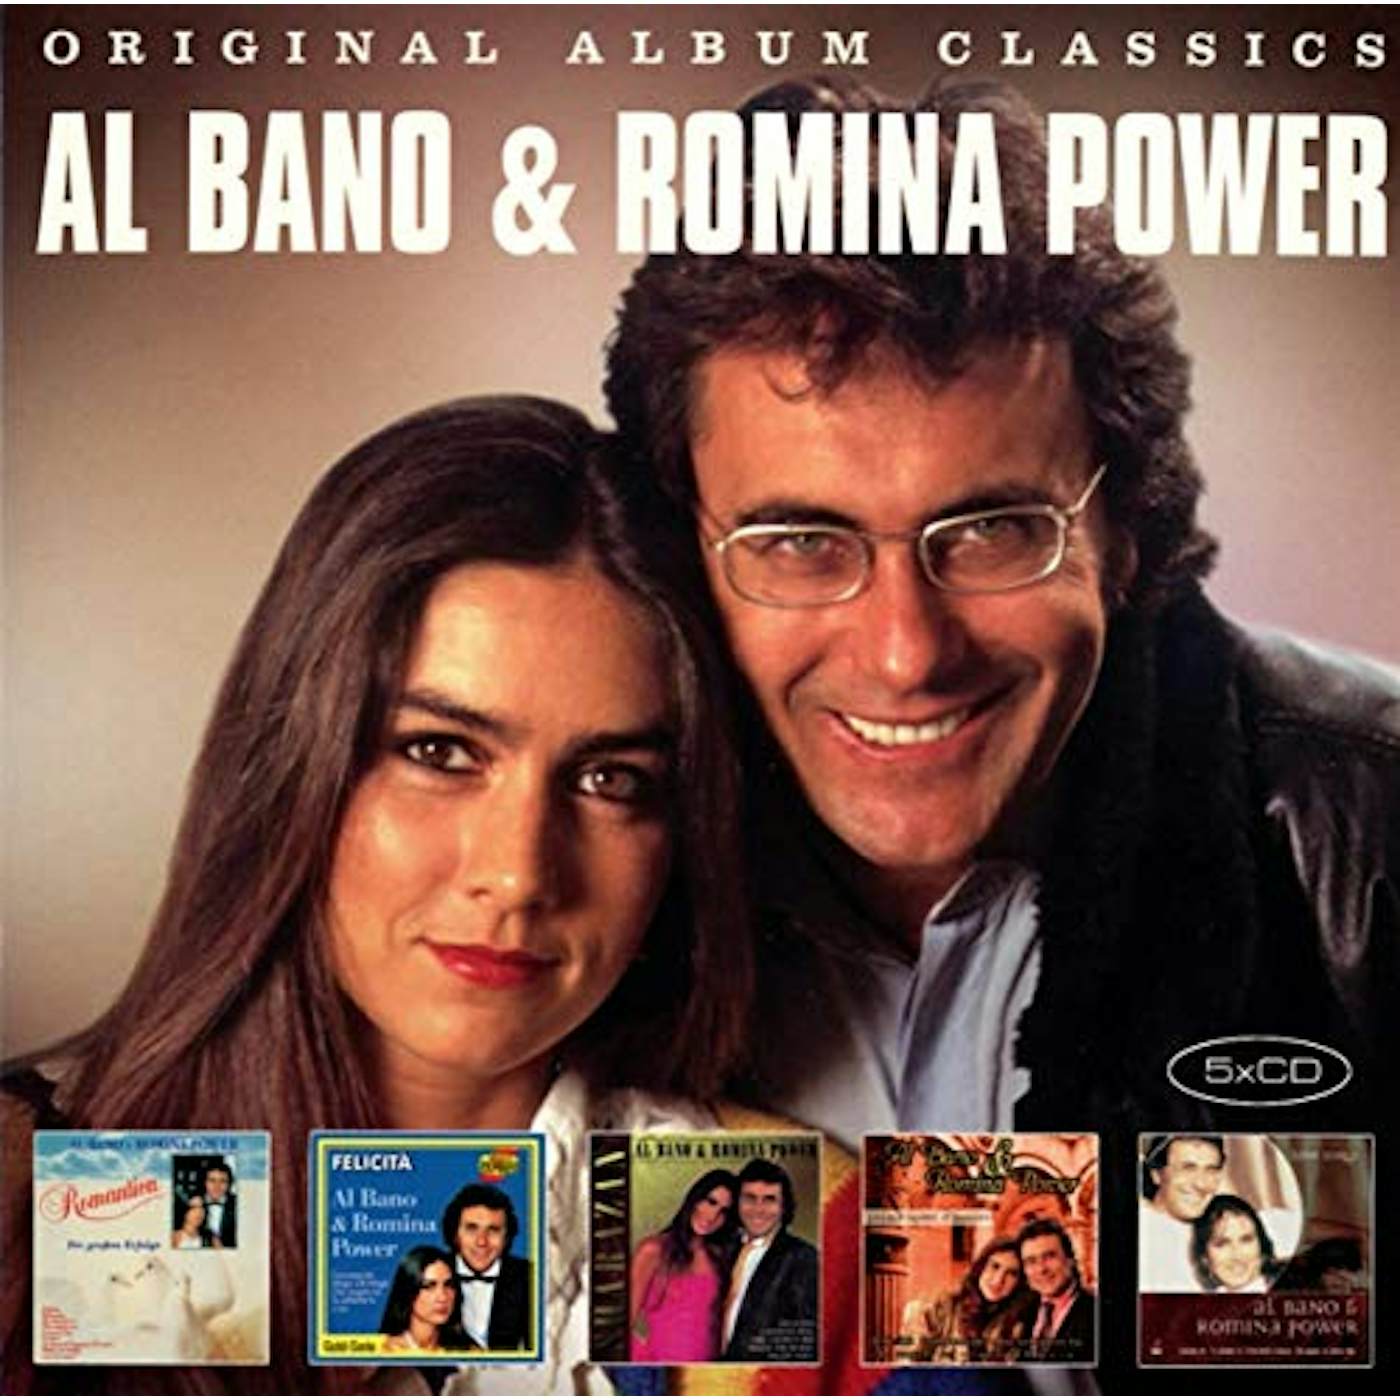 Al Bano And Romina Power ORIGINAL ALBUM CLASSICS CD